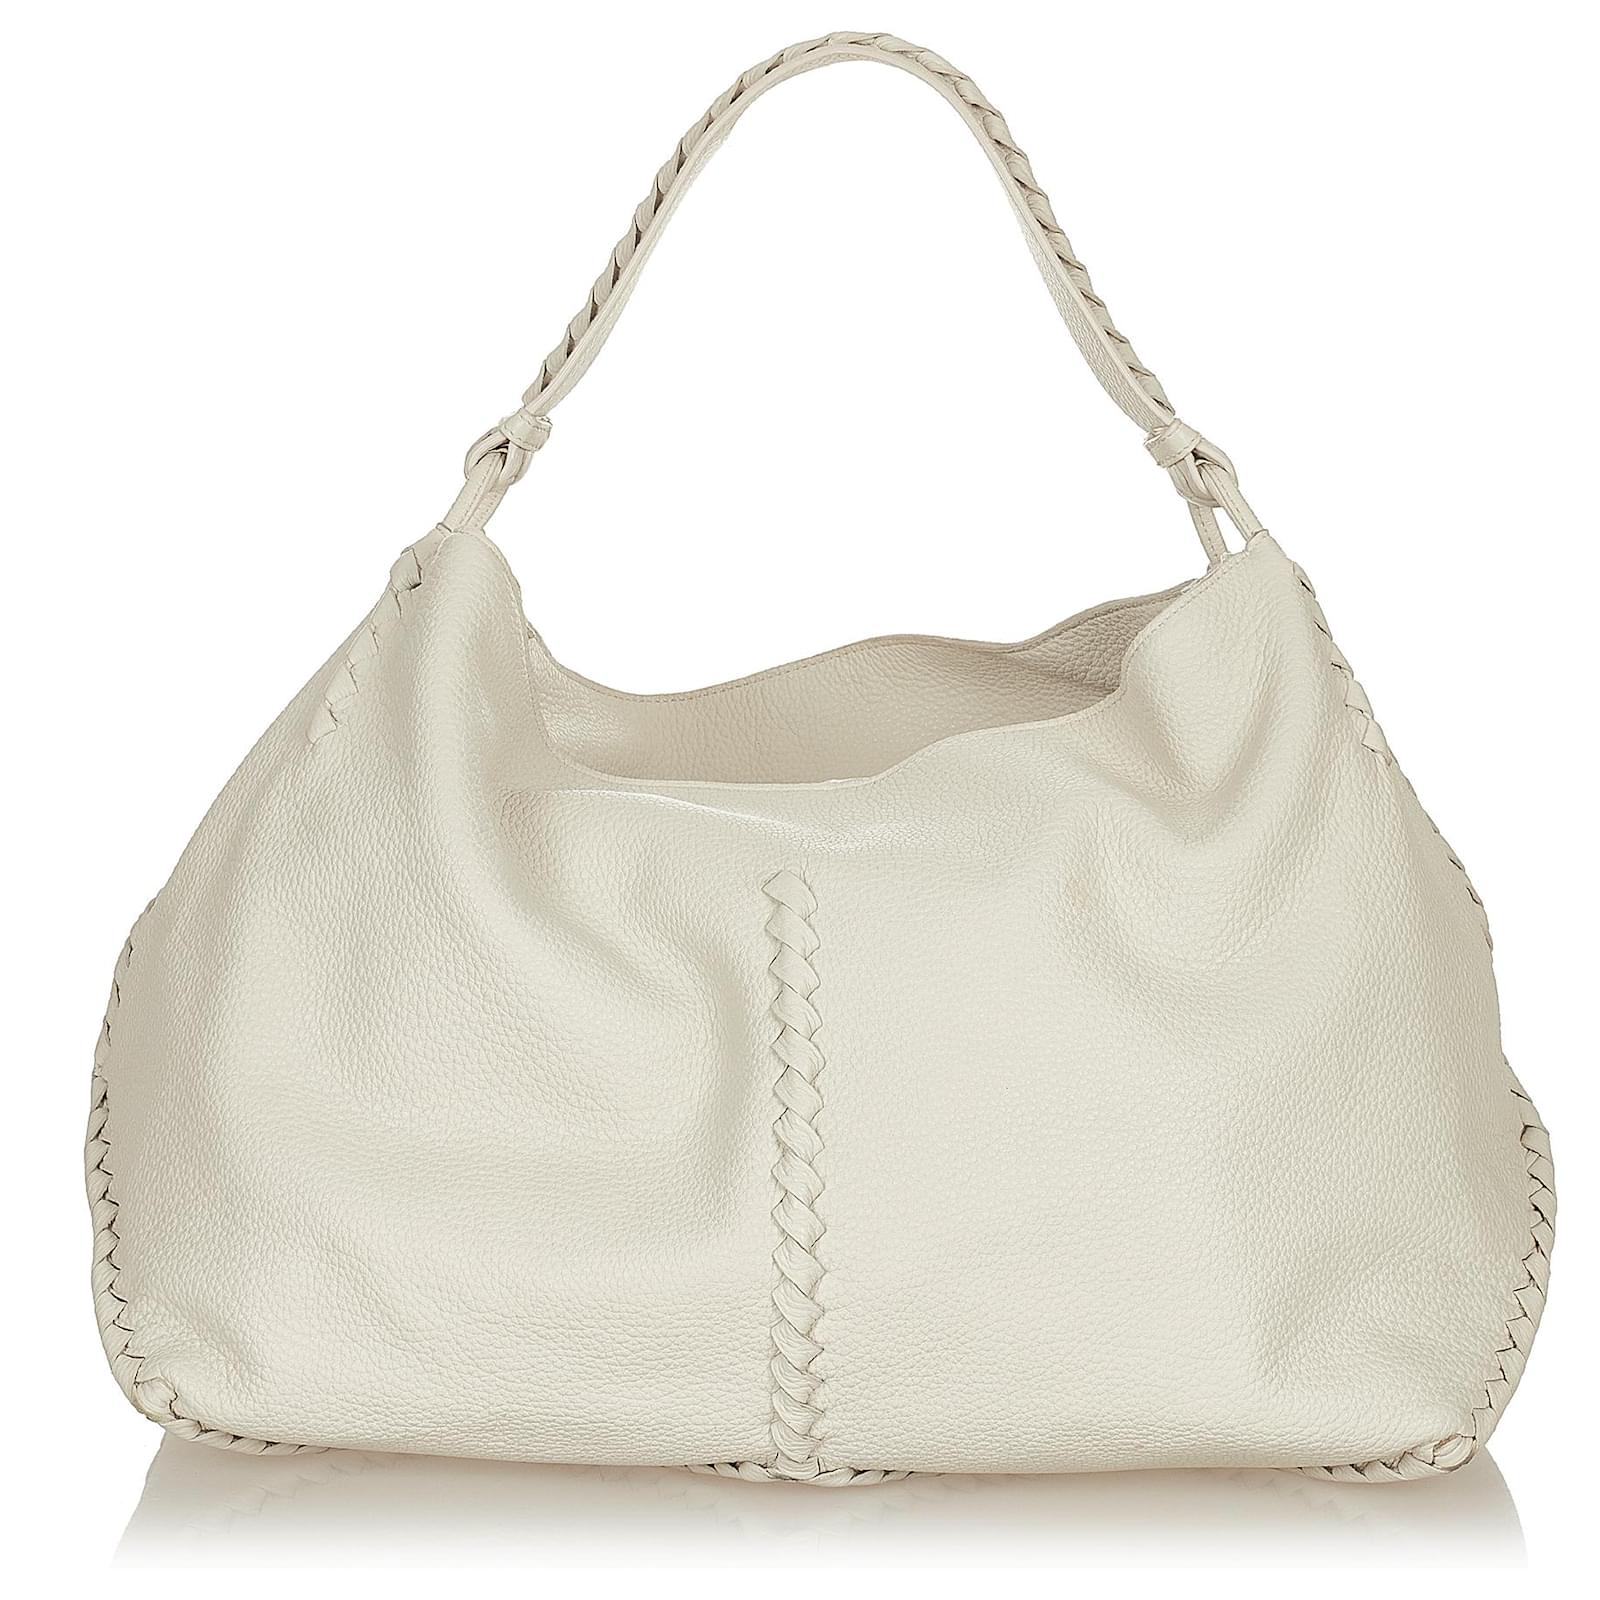 Bottega Veneta White Loop Cervo Leather Shoulder Bag Pony-style